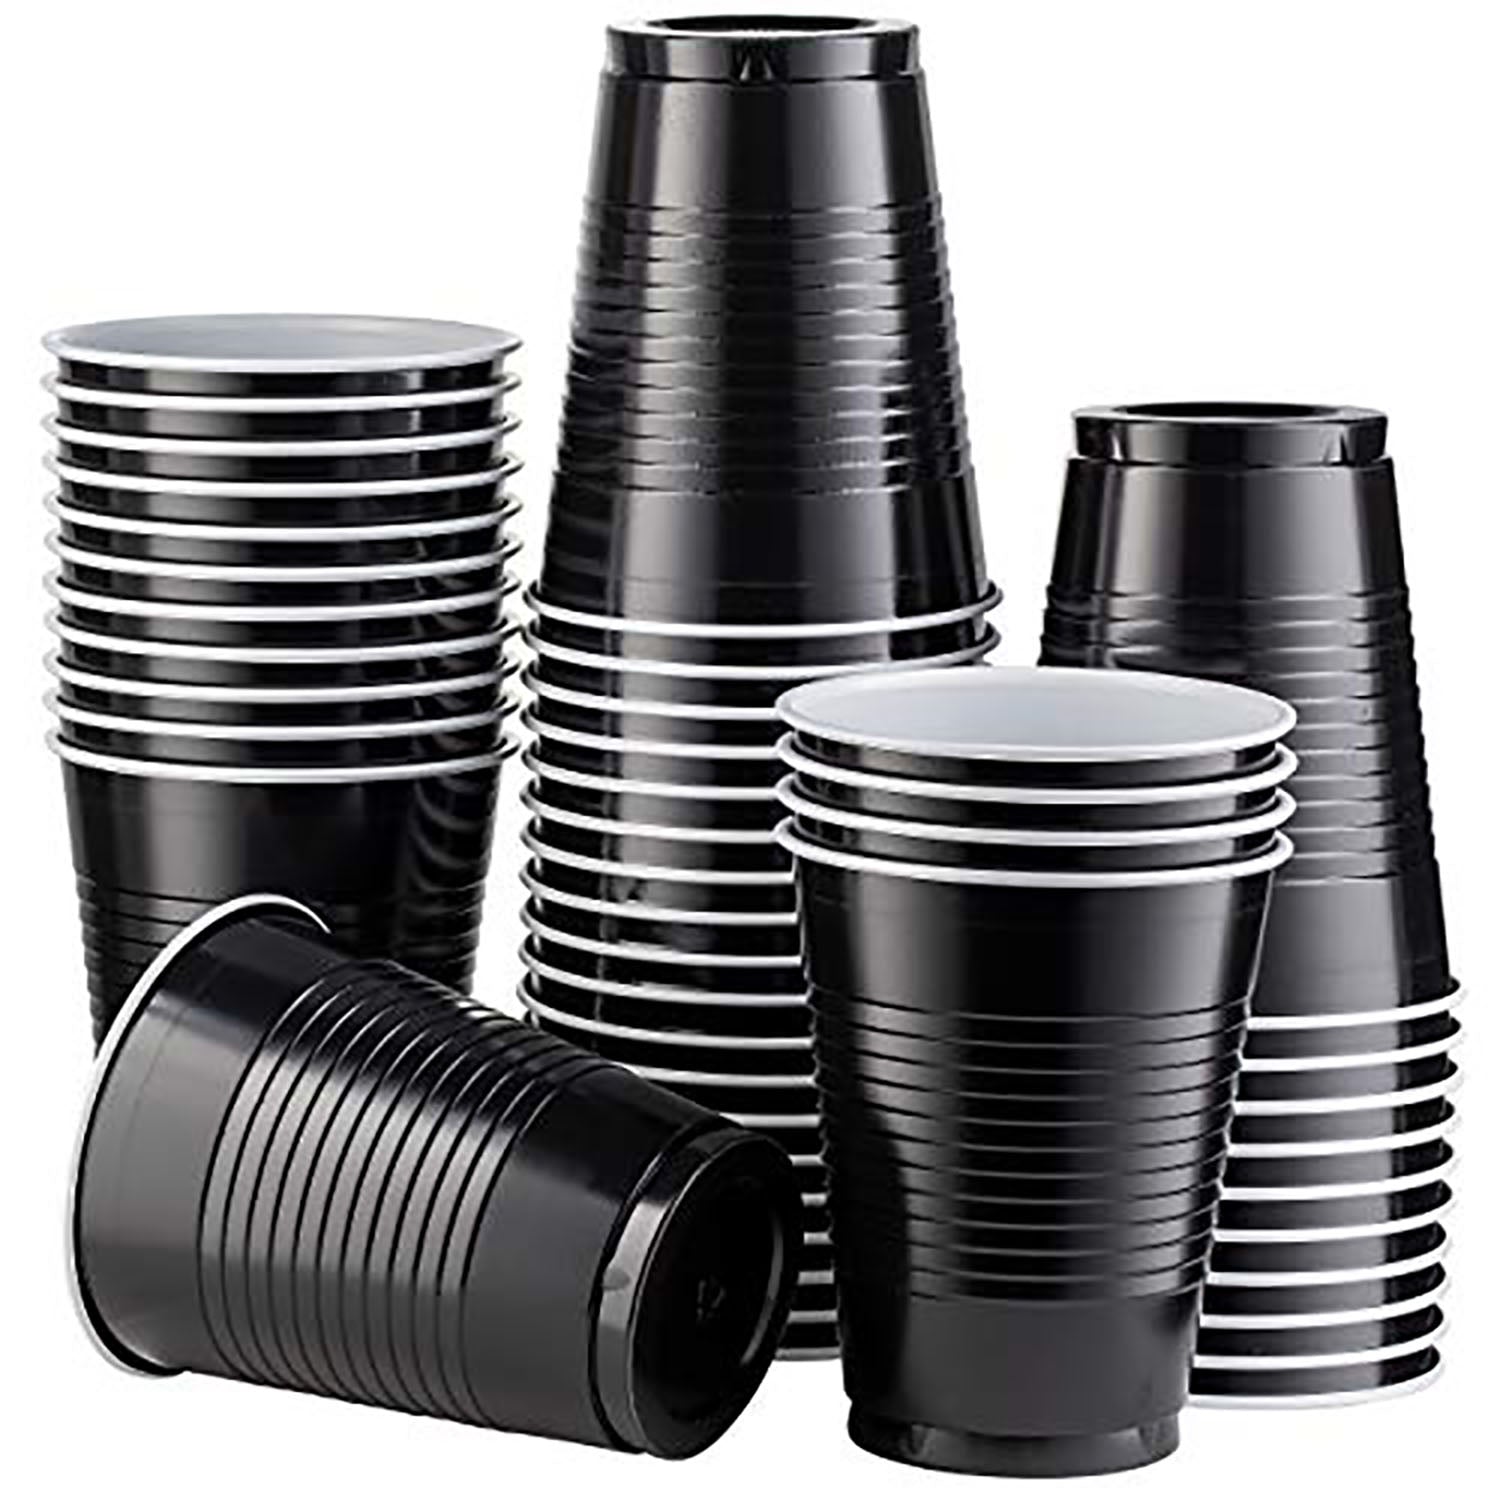 Hanna K Plastic Cups, Silver - 50 count, 18 oz each